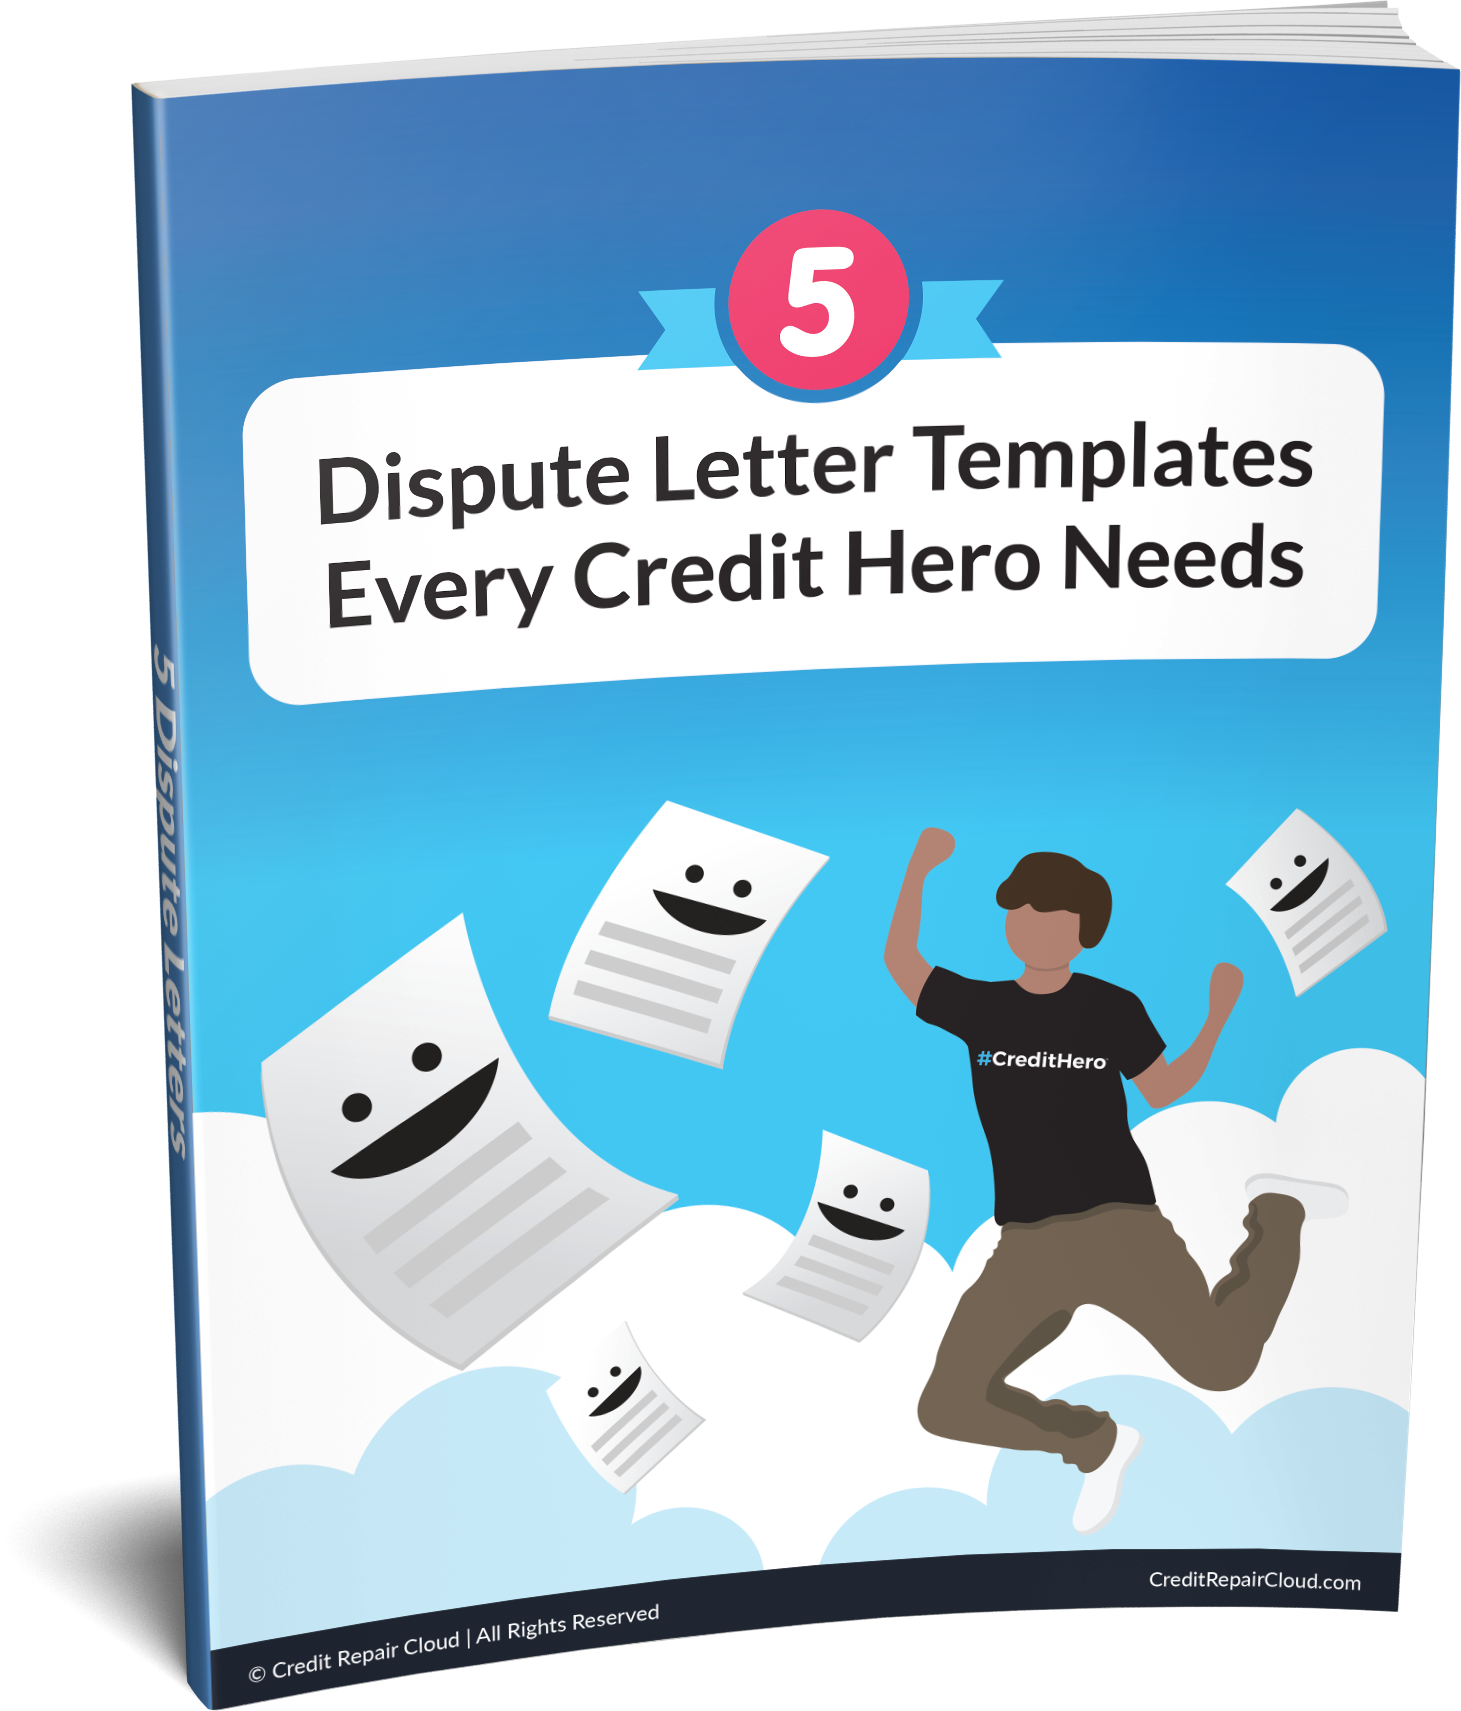 Dispute Letter Templates Every Credit Hero Needs - Render